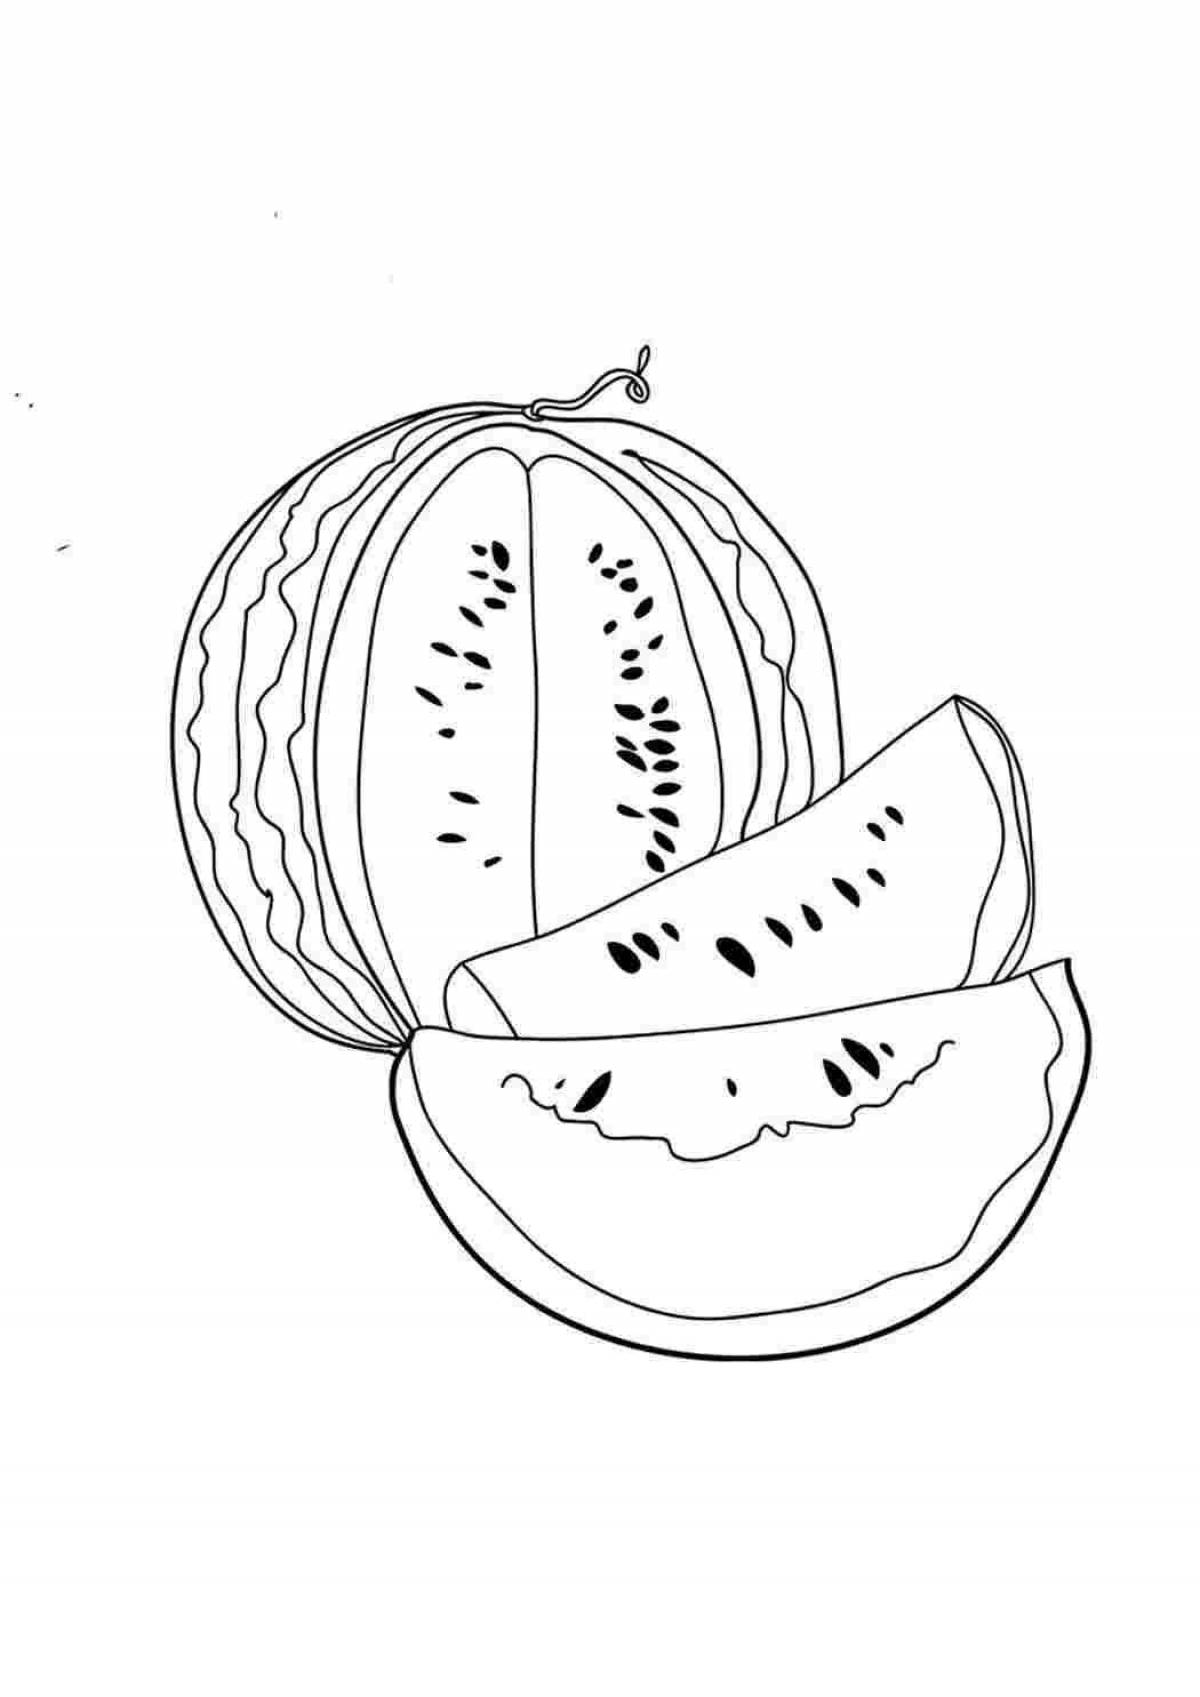 Креативный рисунок арбуза